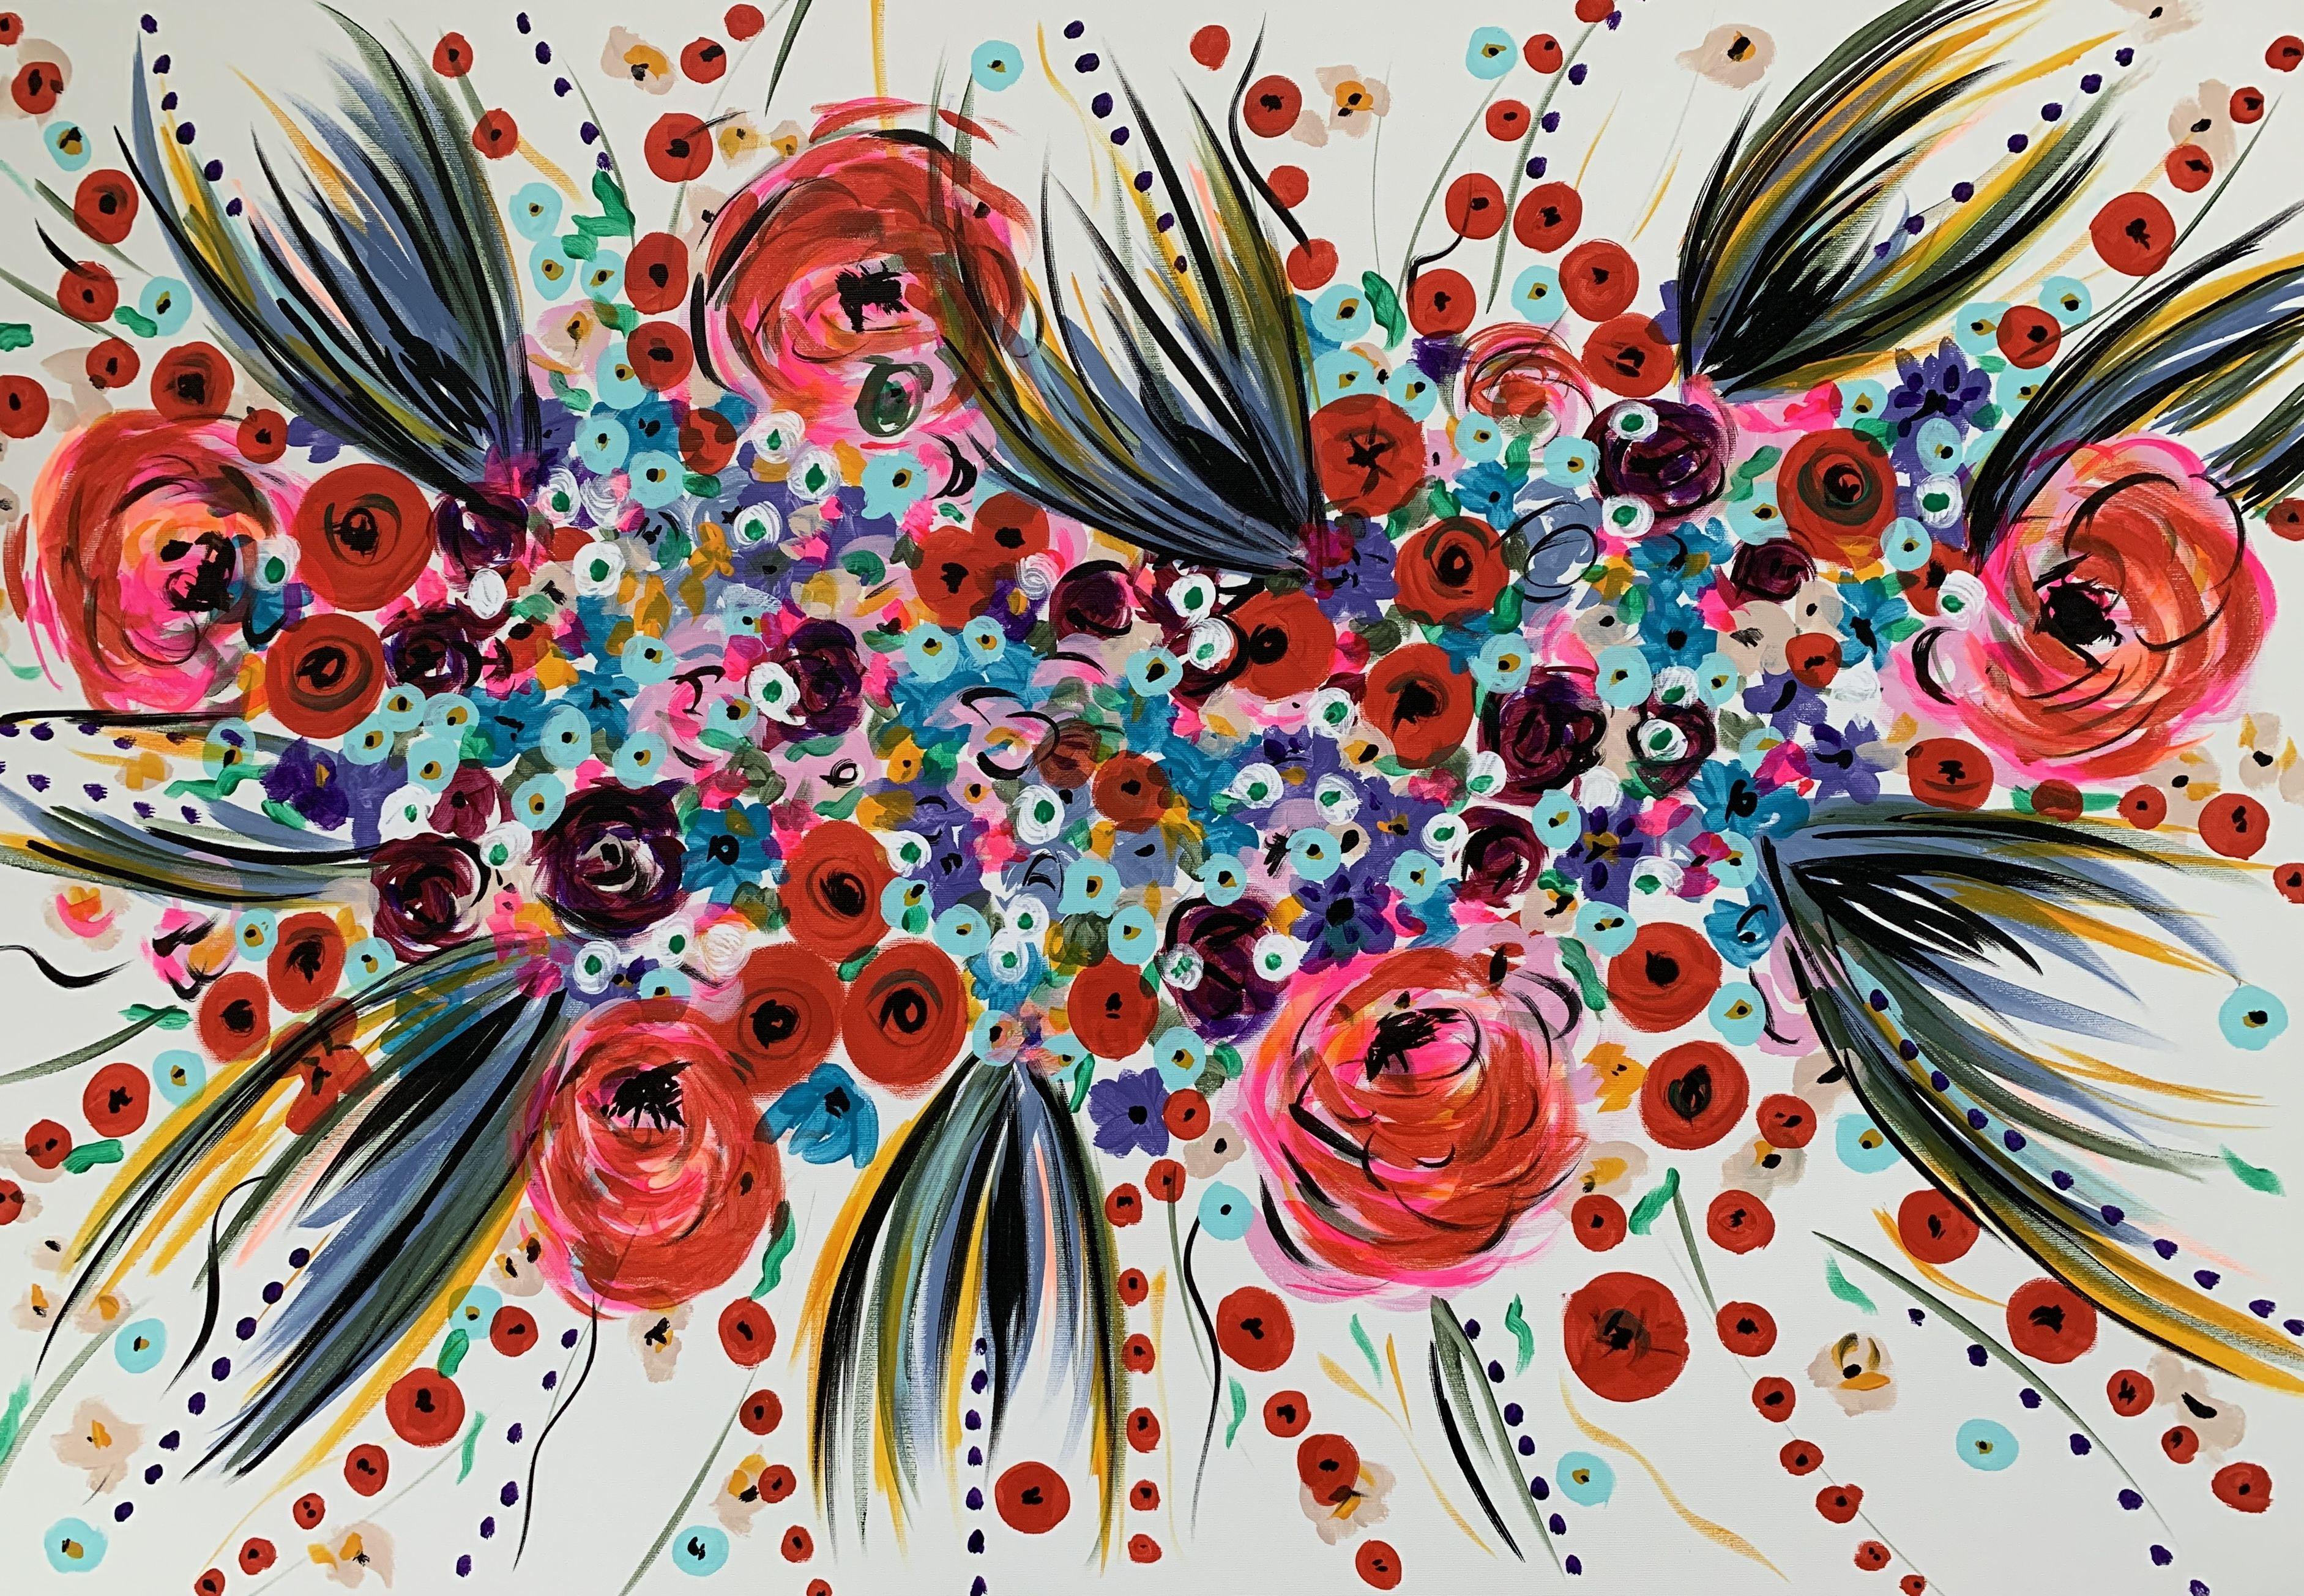 Garden of joy 51, Mixed Media on Canvas - Mixed Media Art by Veronica Vilsan